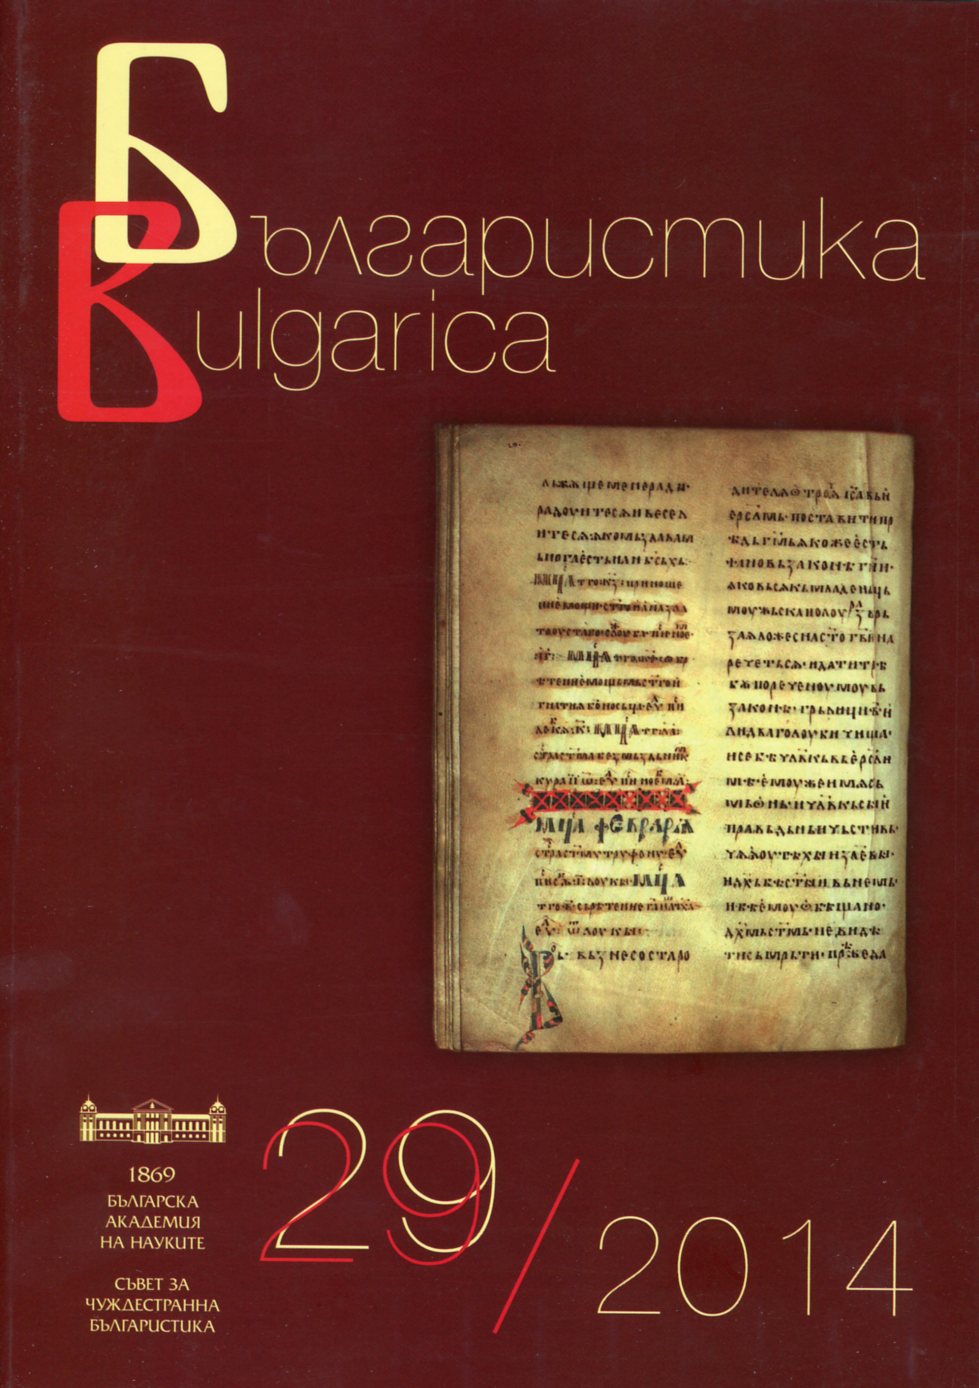 Books 2014 Cover Image